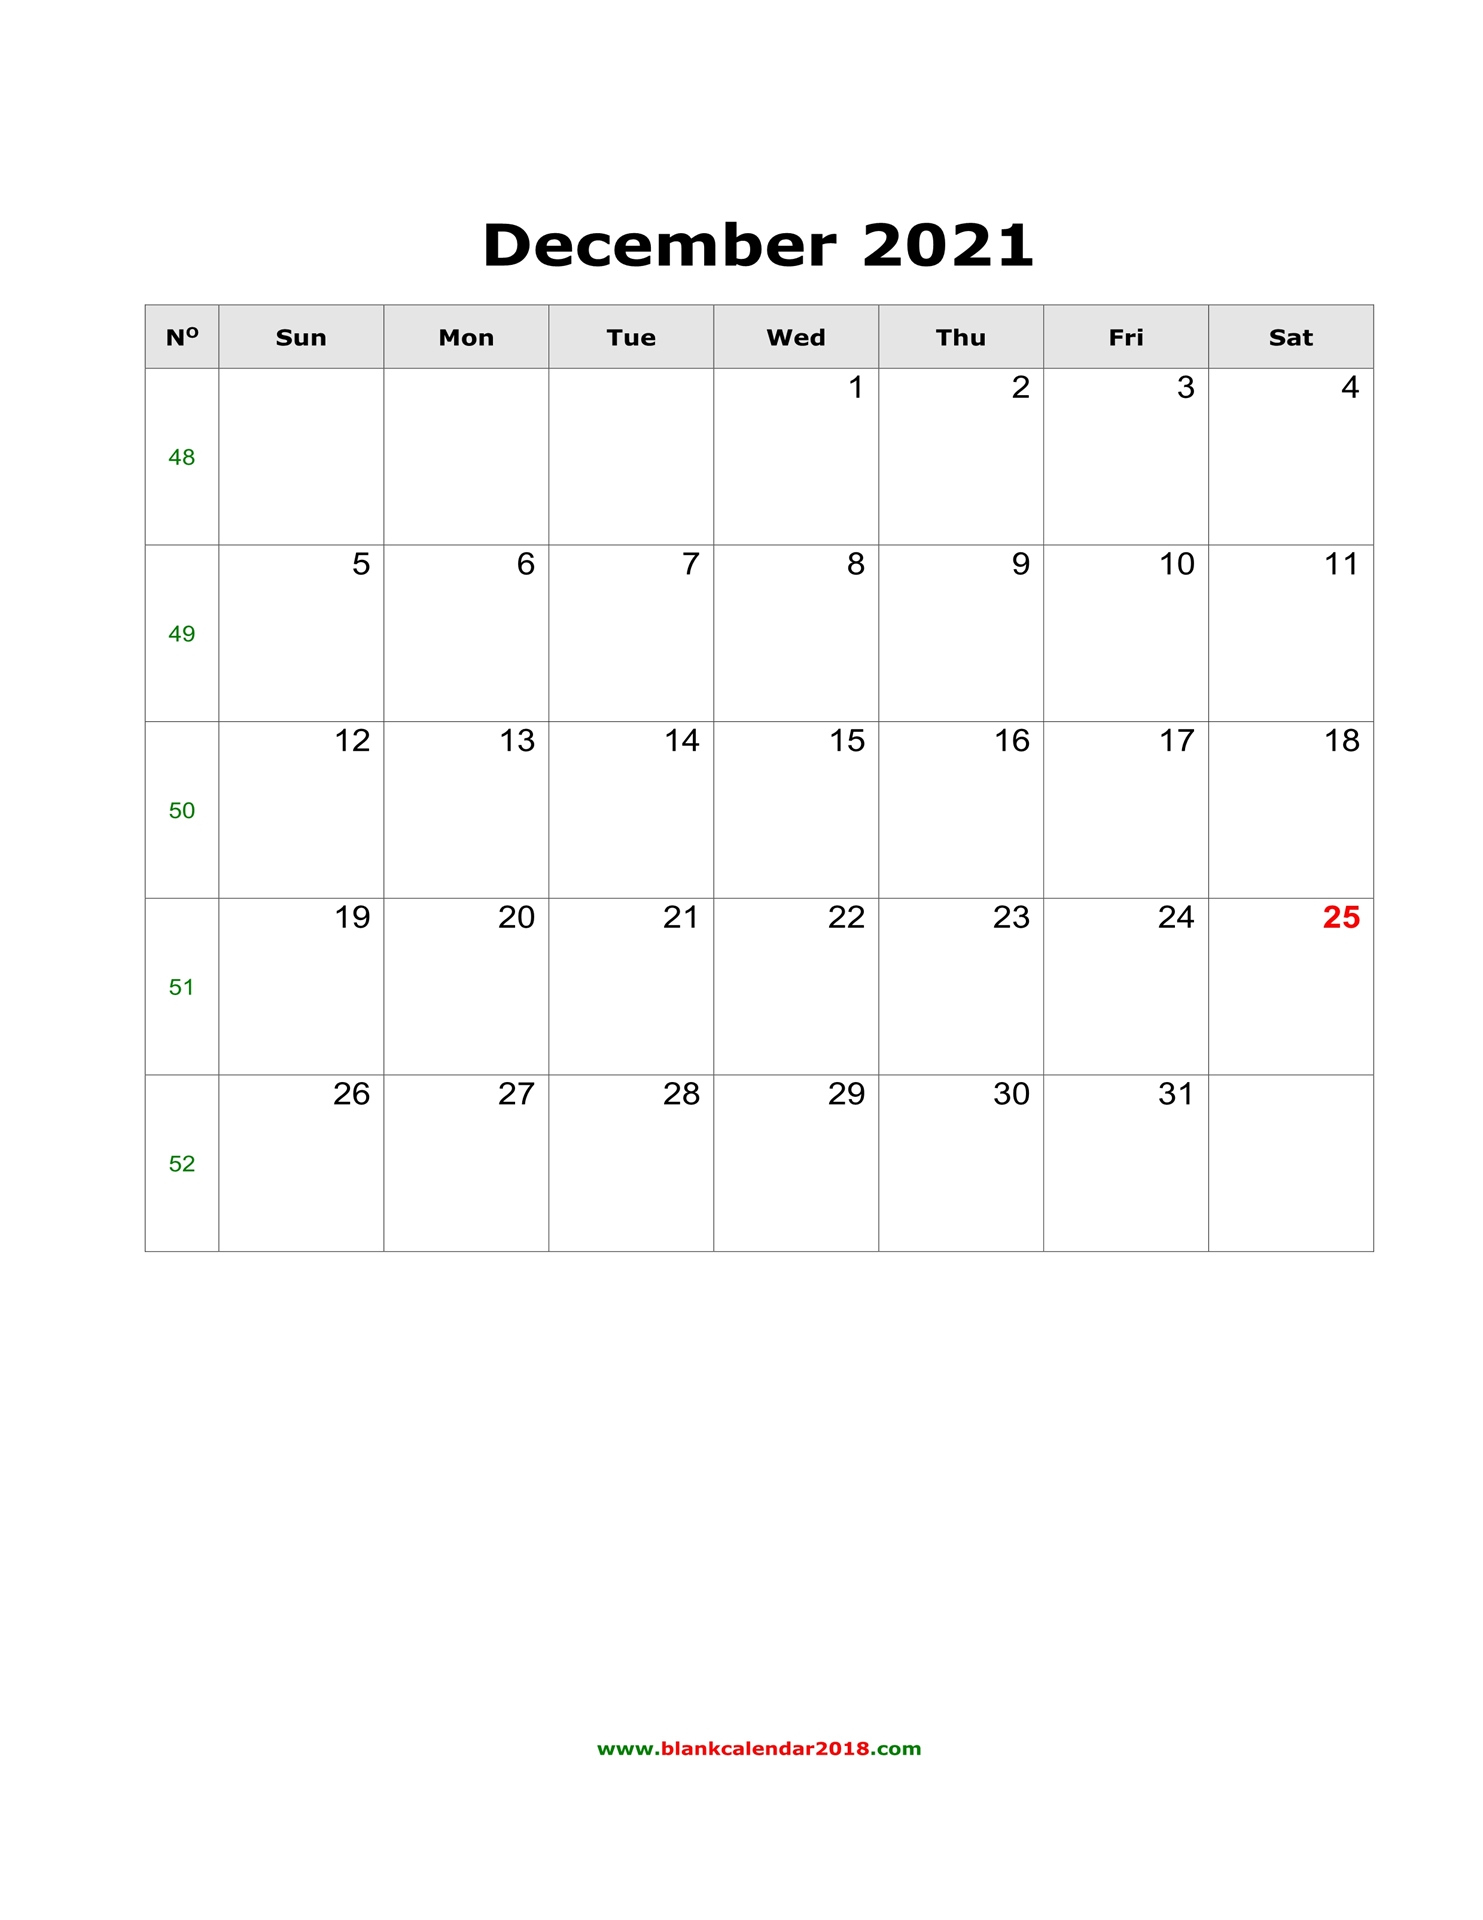 Blank Calendar For December 2021 December 2020 To Feb 2021 Calendar